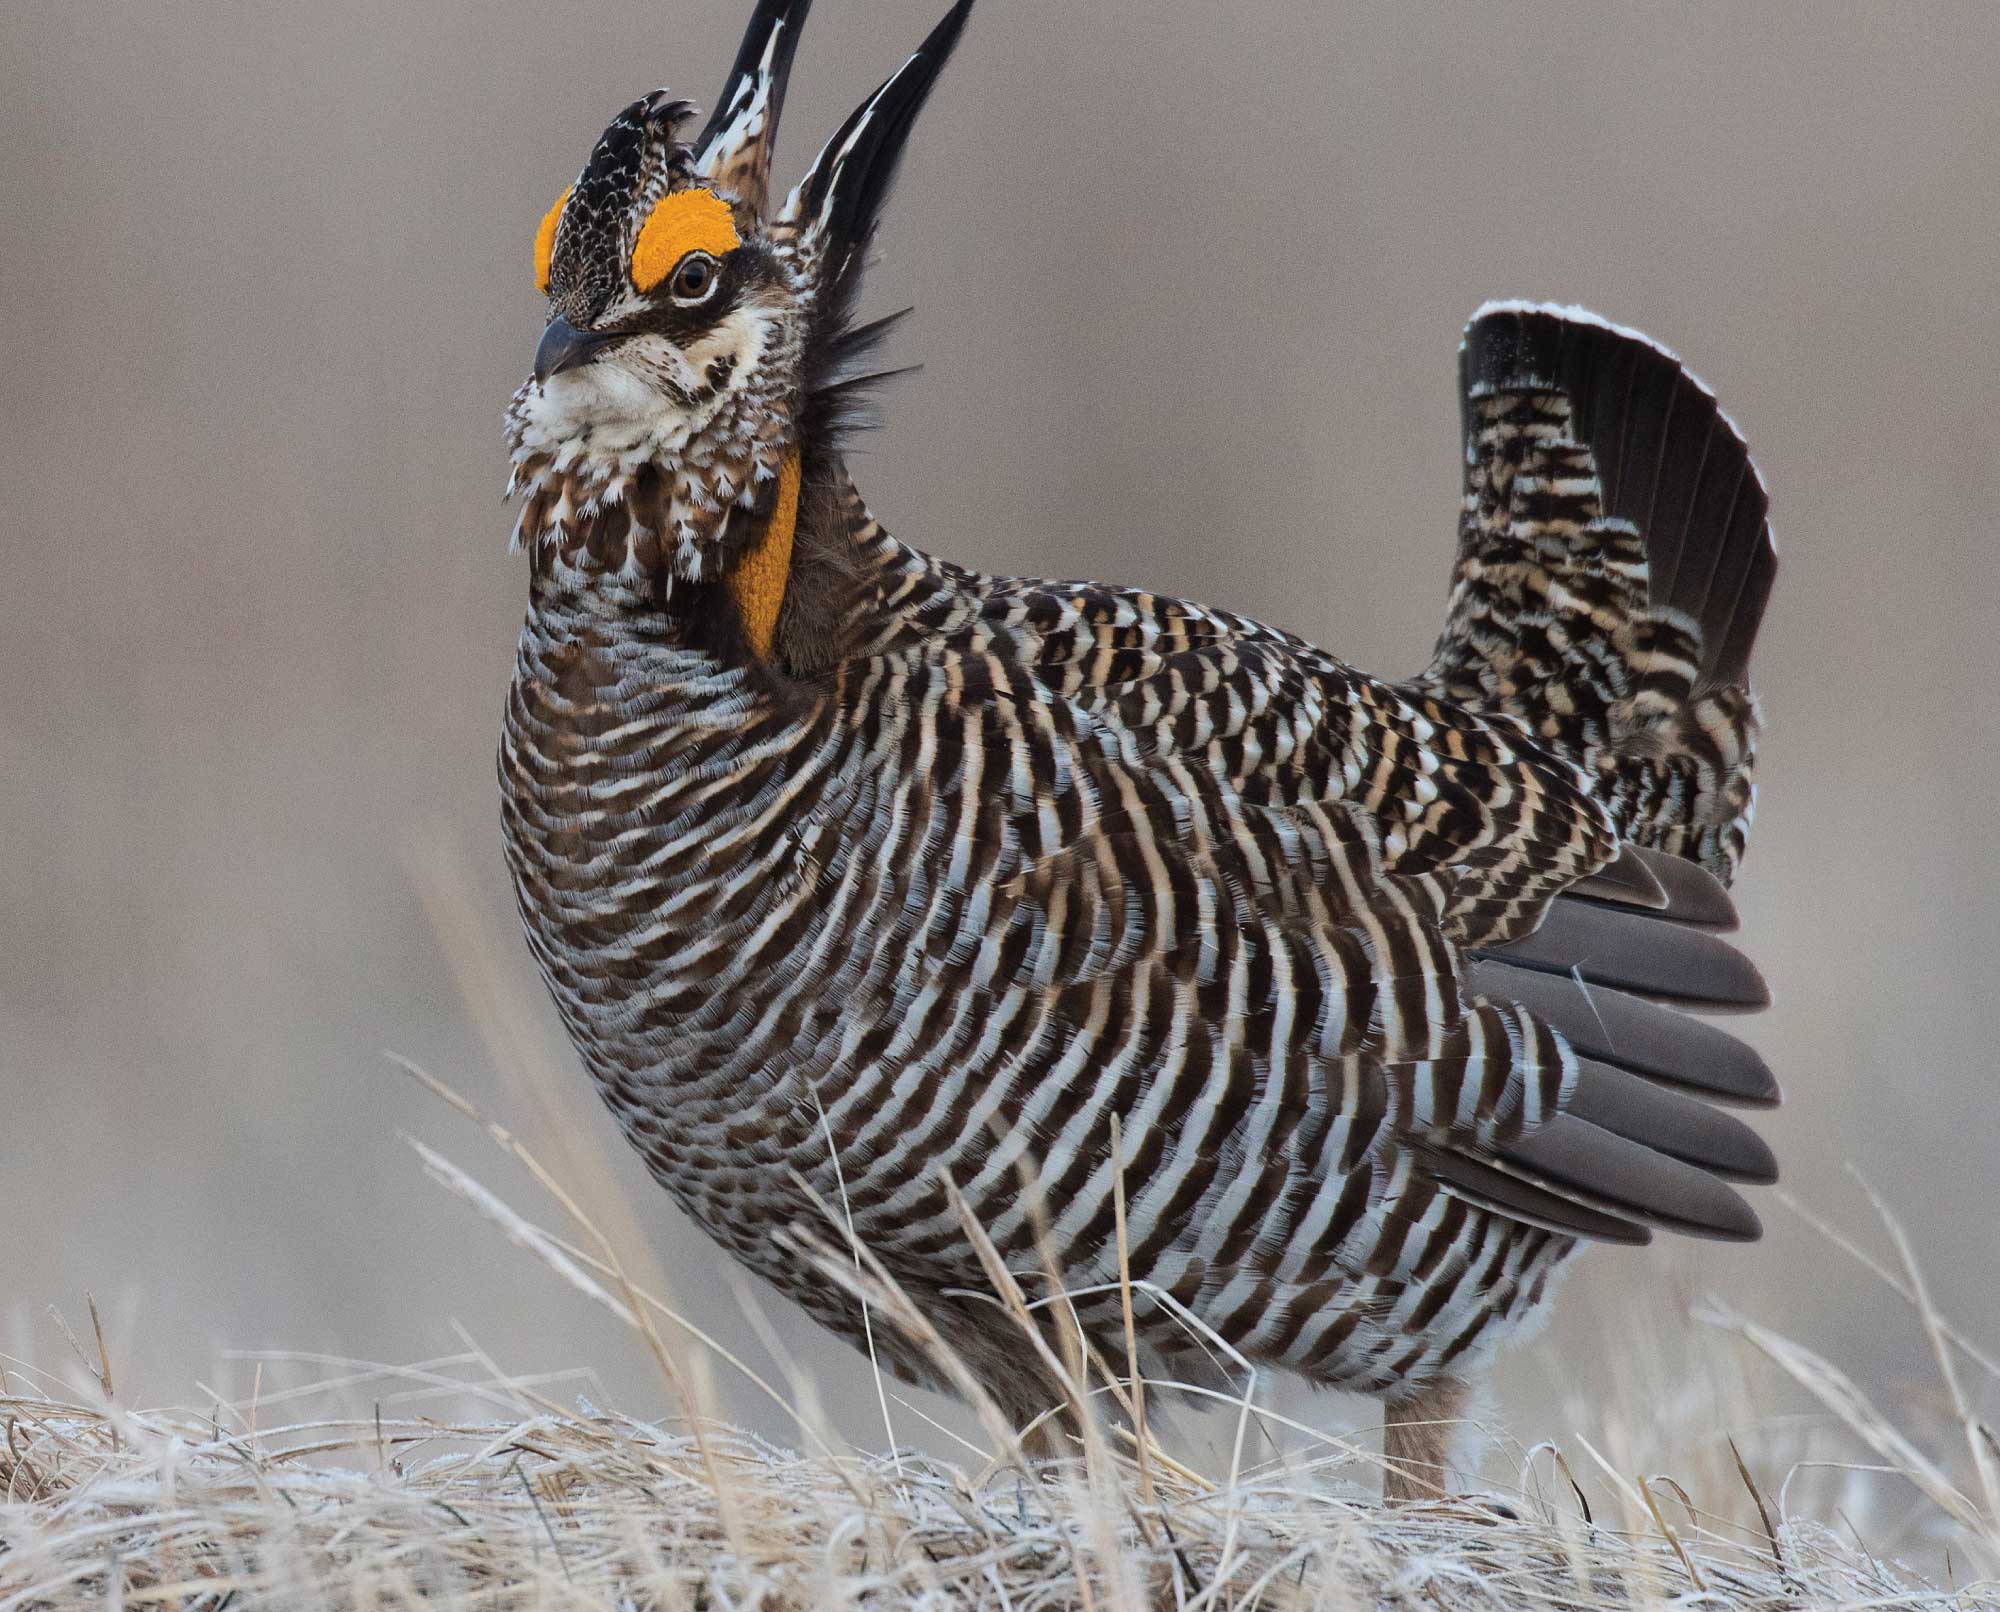 Greater-Prairie-Chicken-%E2%80%93-An-Upland-Game-Bird-Profile-3.jpg